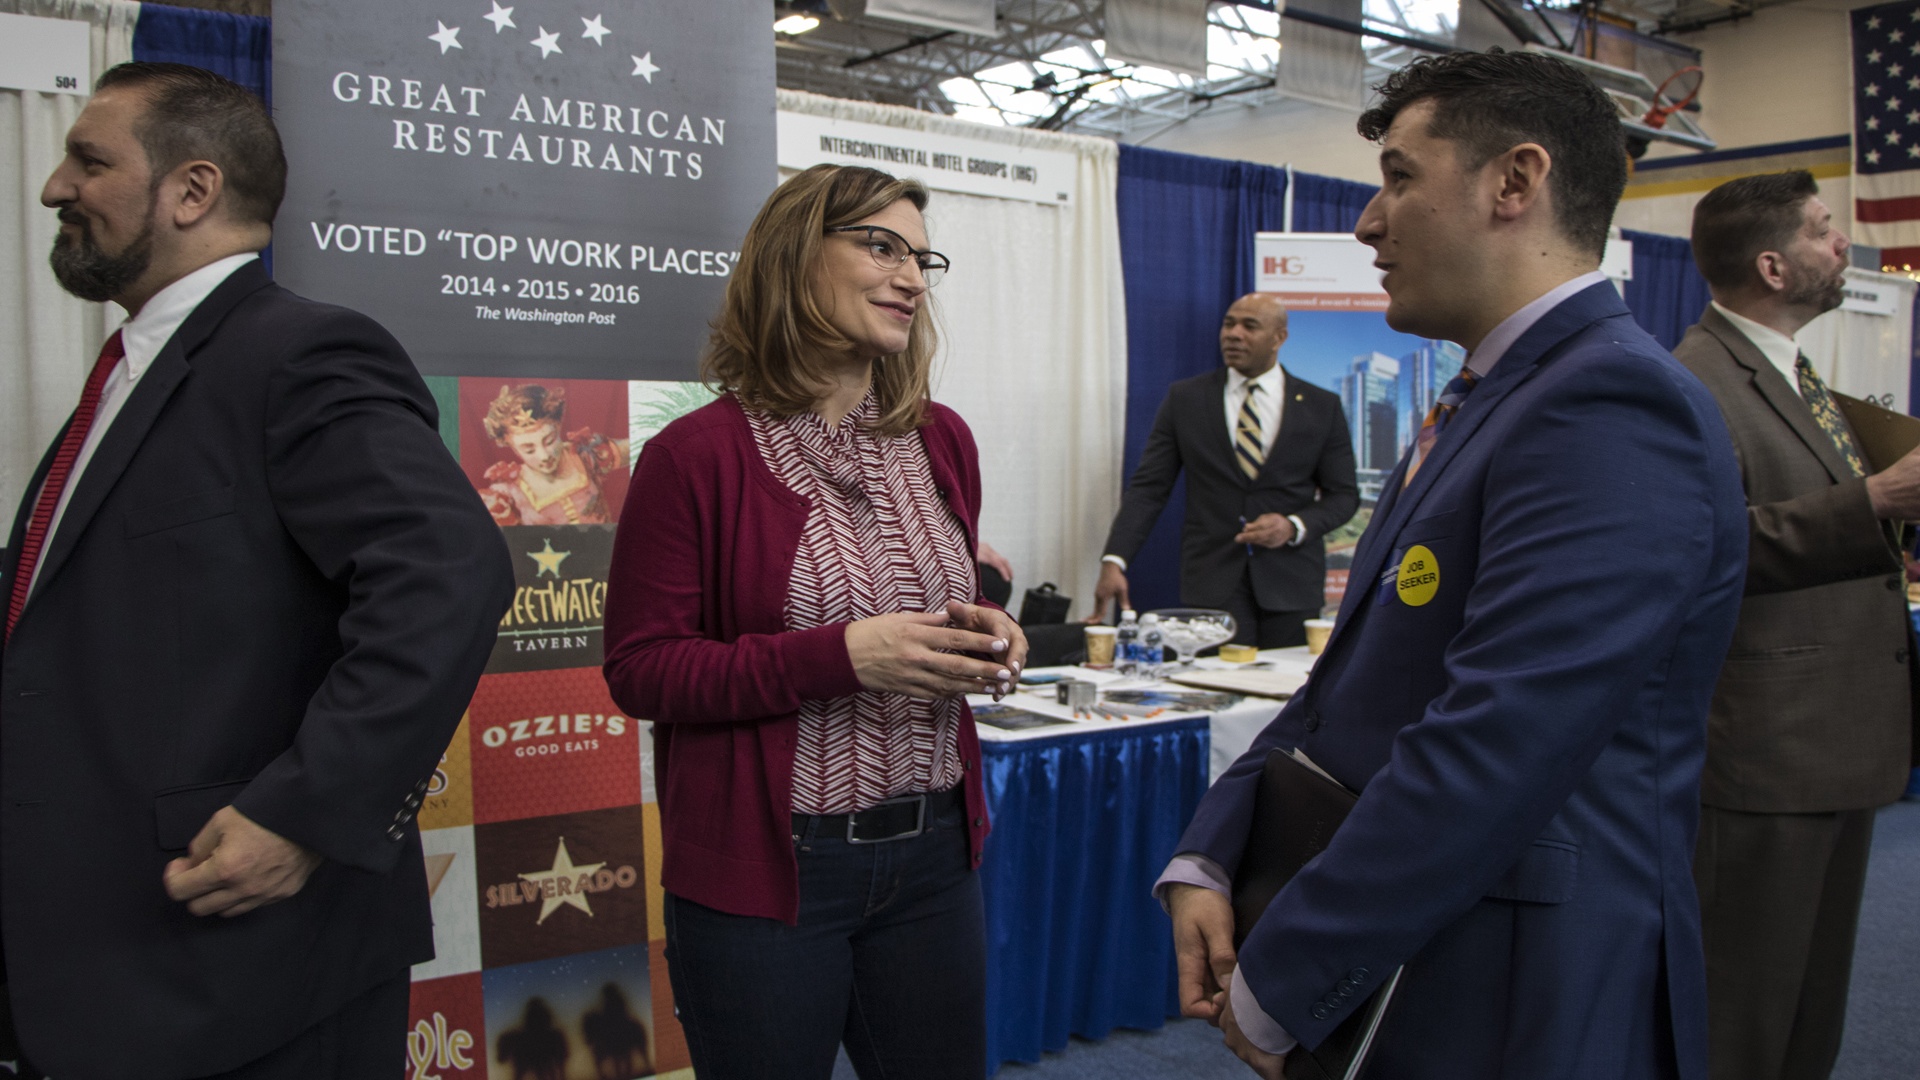 A JWU job seeker chatting with a restaurant representative at the Career Fair.